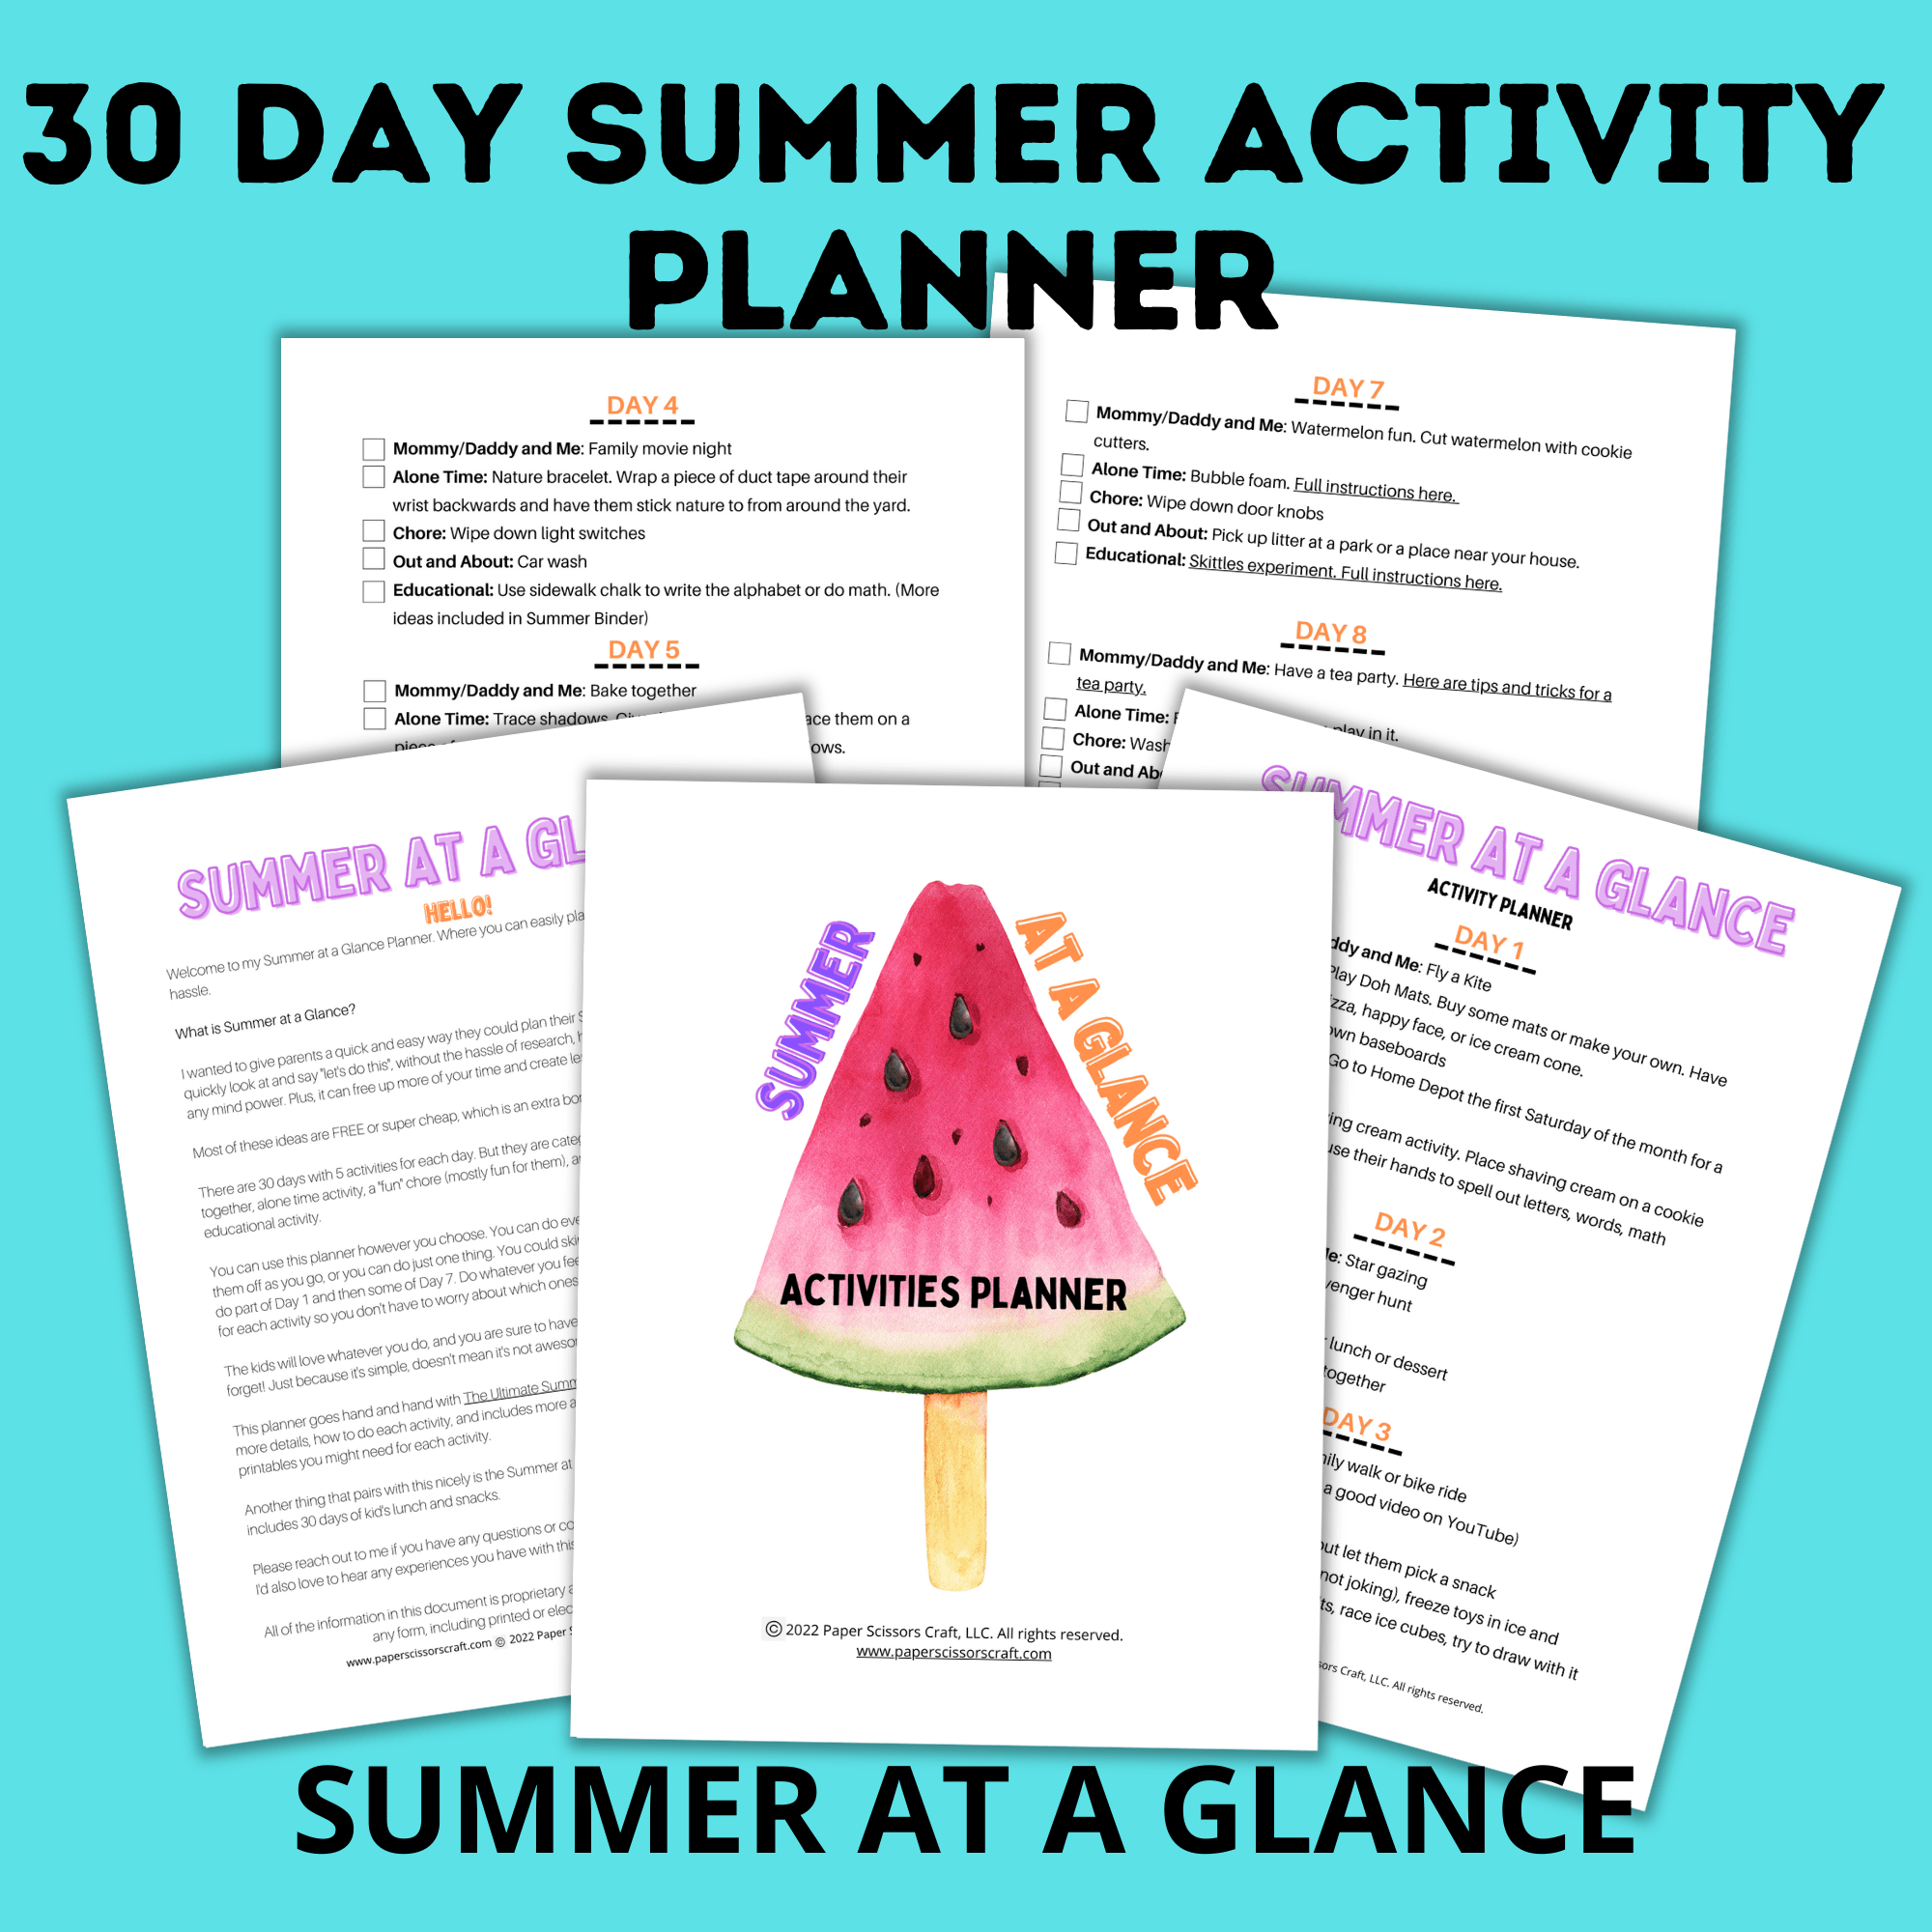 30 day summer activity planner mockup image.